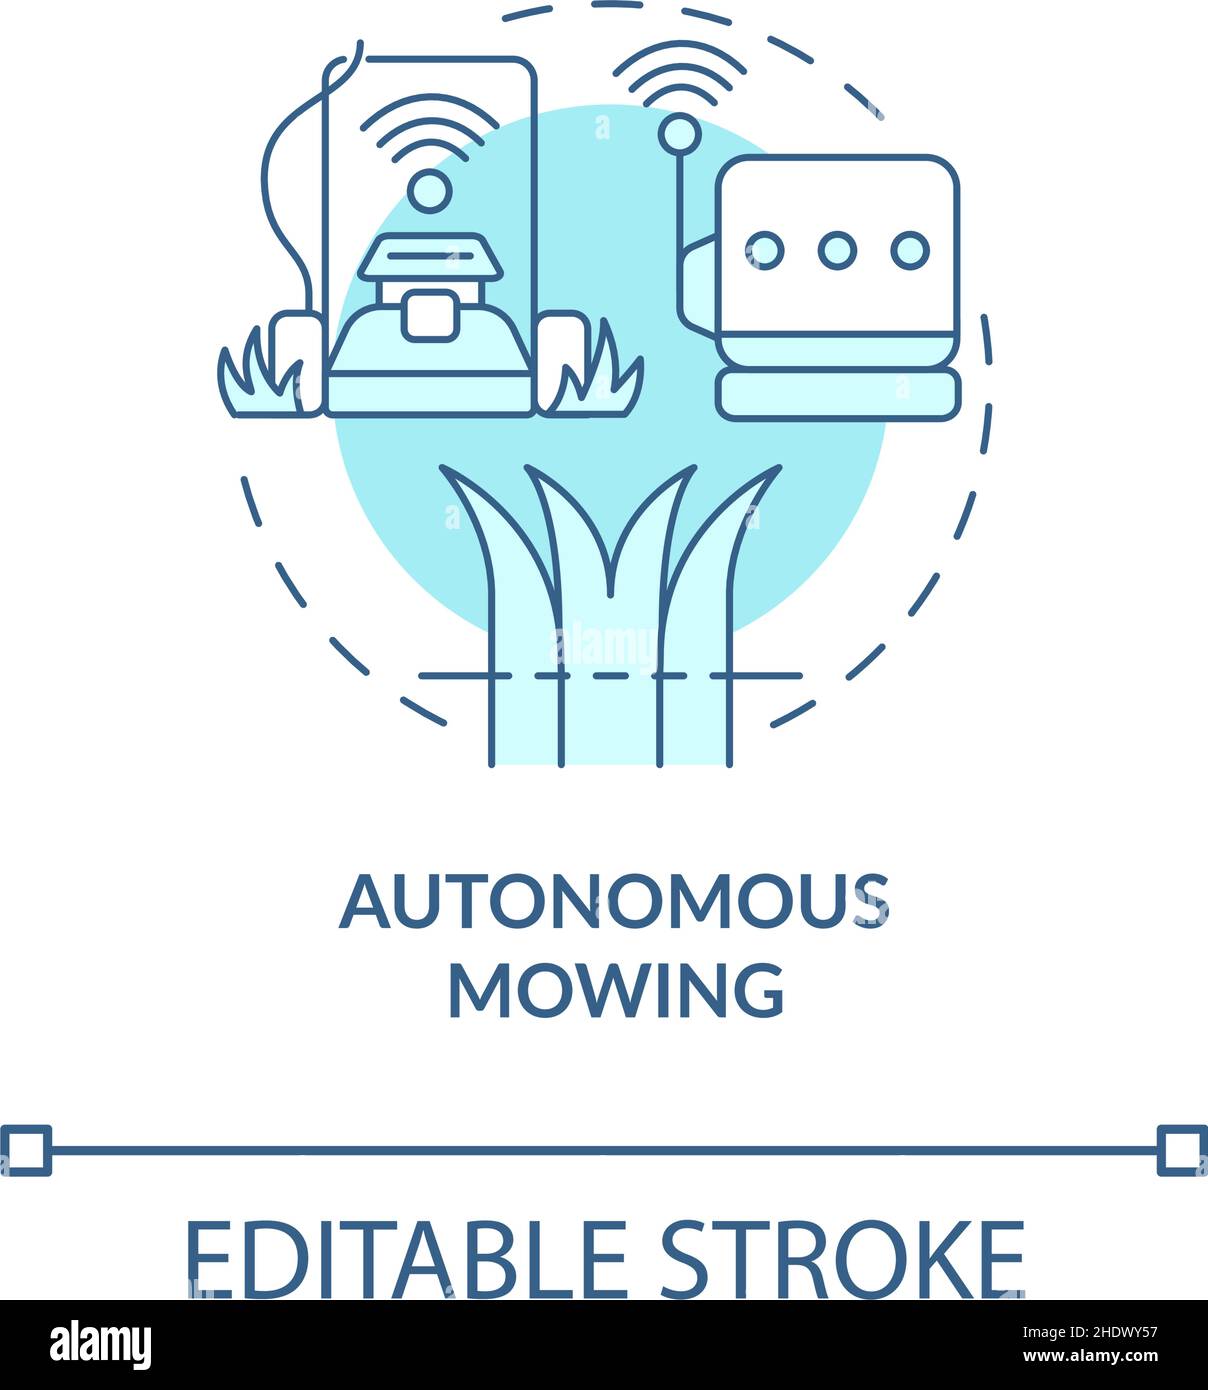 Autonomous mowing turquoise concept icon Stock Vector